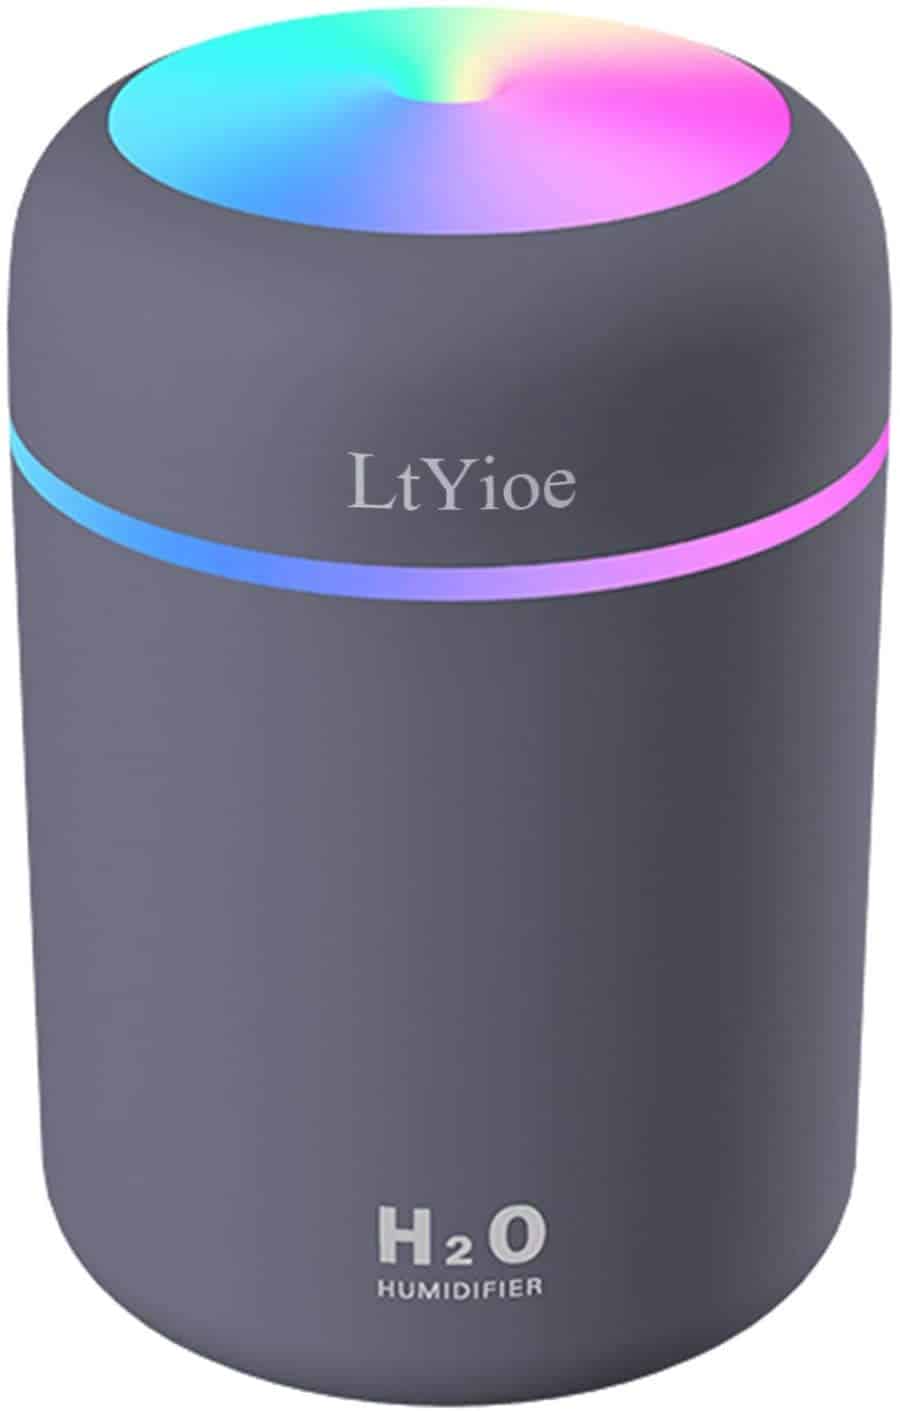 LtYioe Humidifier